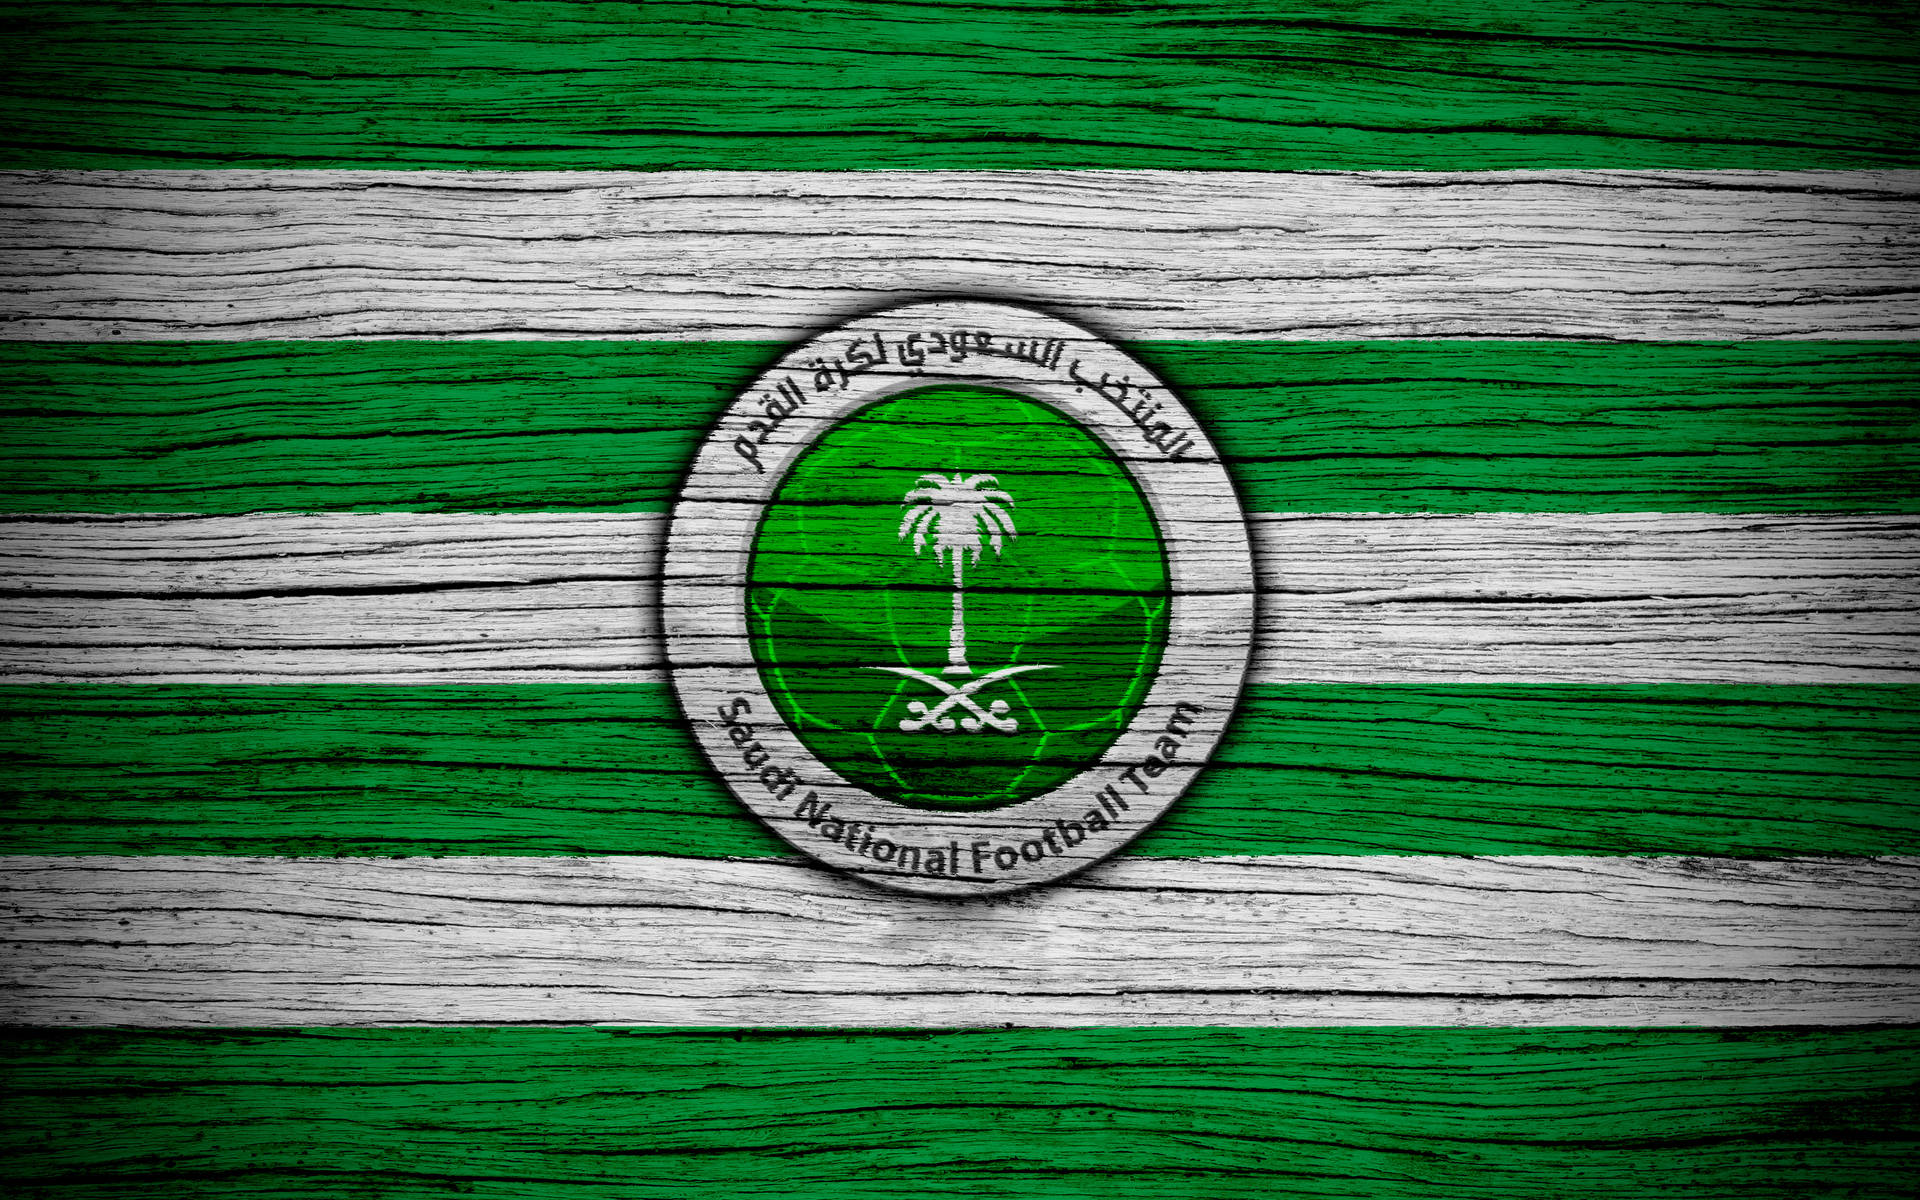 Saudi Arabia National Football Team Wood Sign Wallpaper